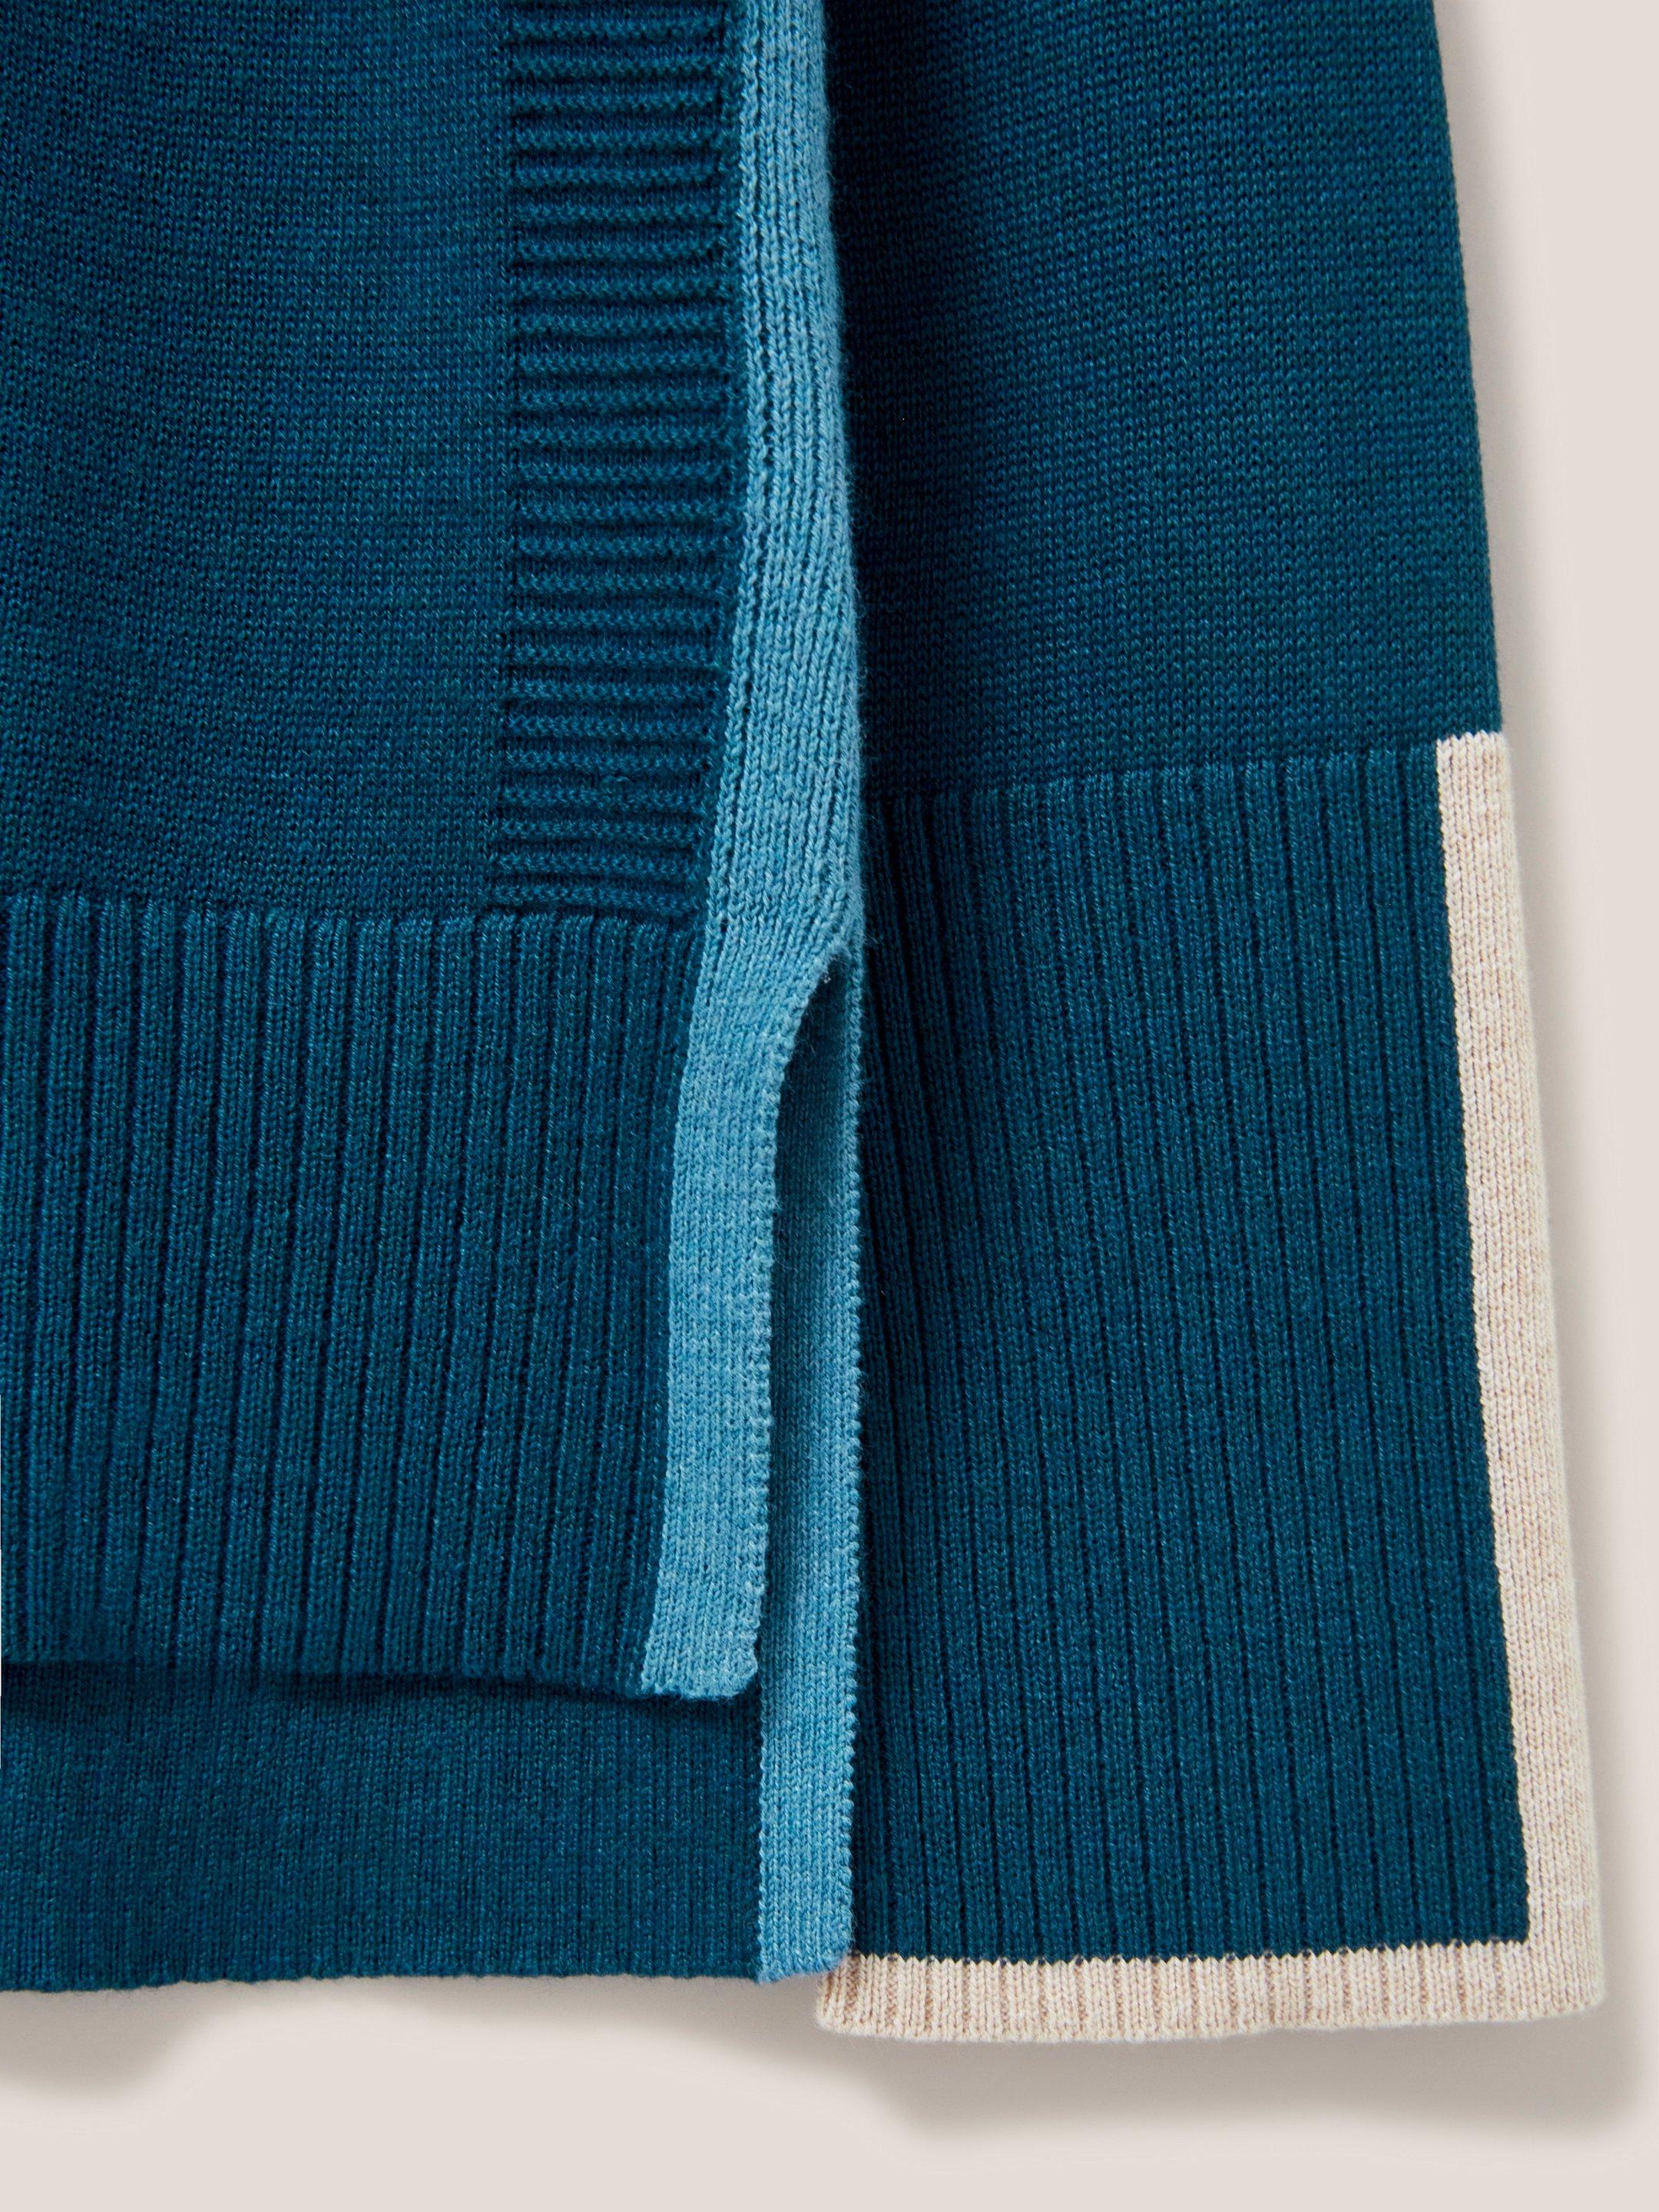 Olive Knitted Jumper in DK TEAL - FLAT DETAIL